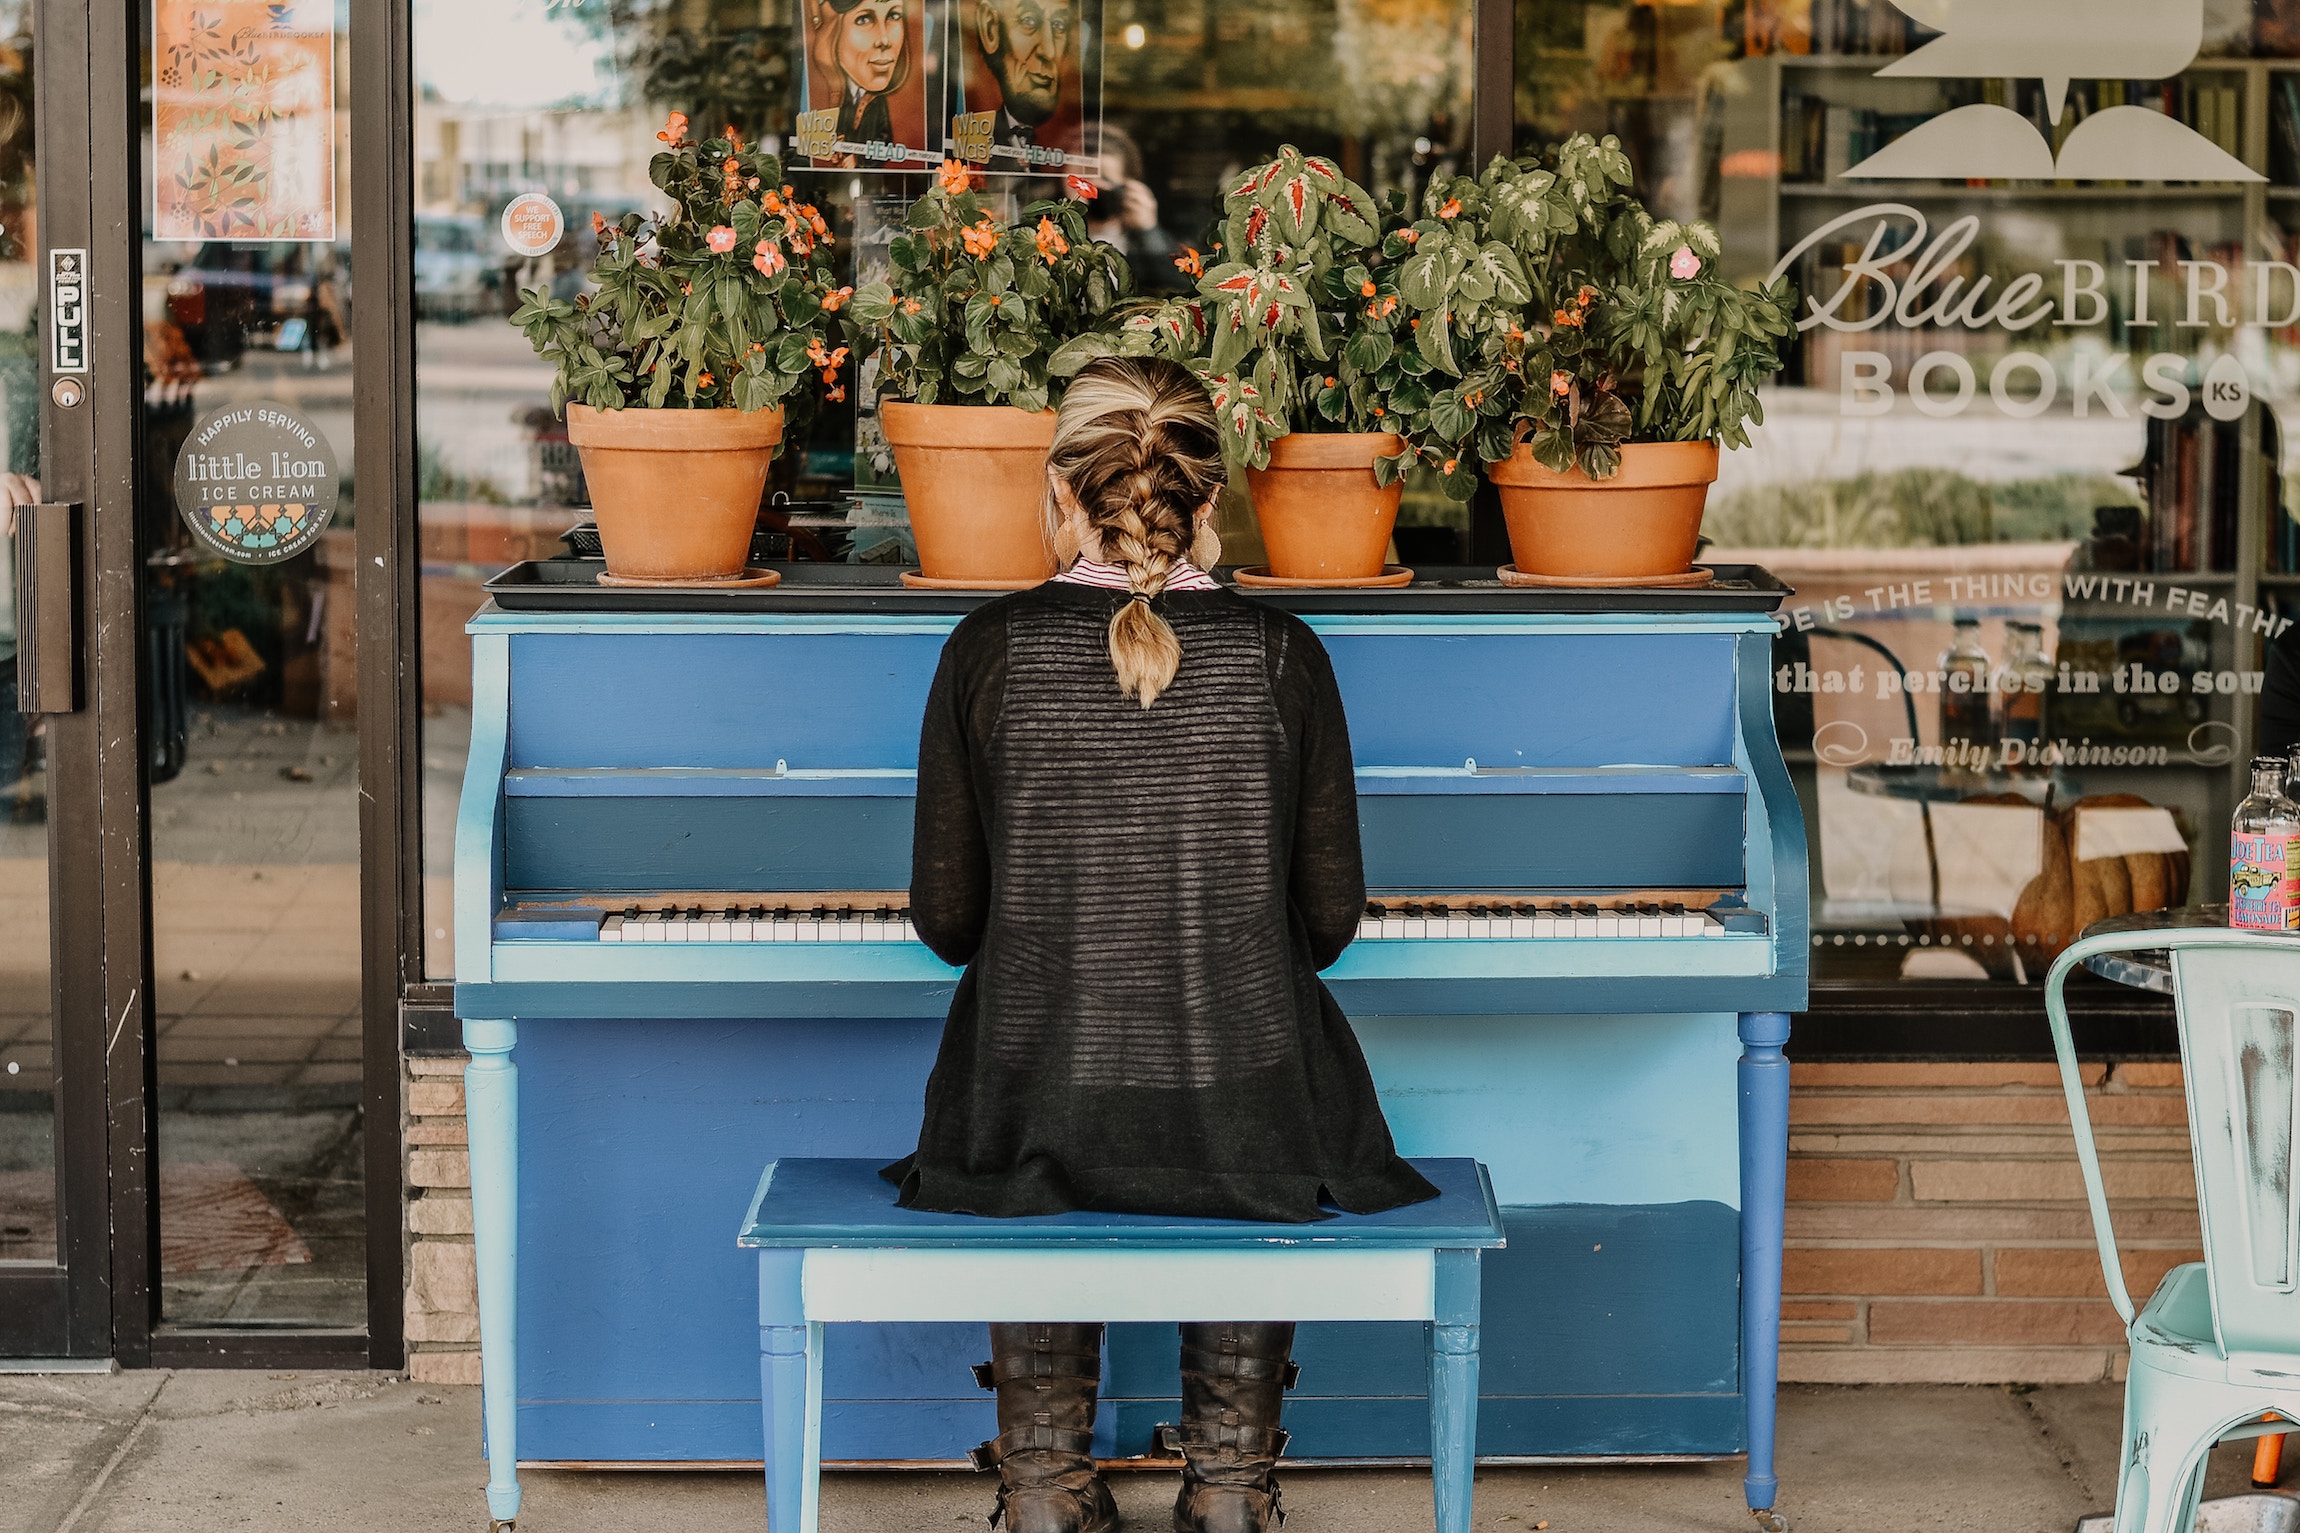 Woman playing piano outside Bluebird Bookstore in Hutchinson, Kan